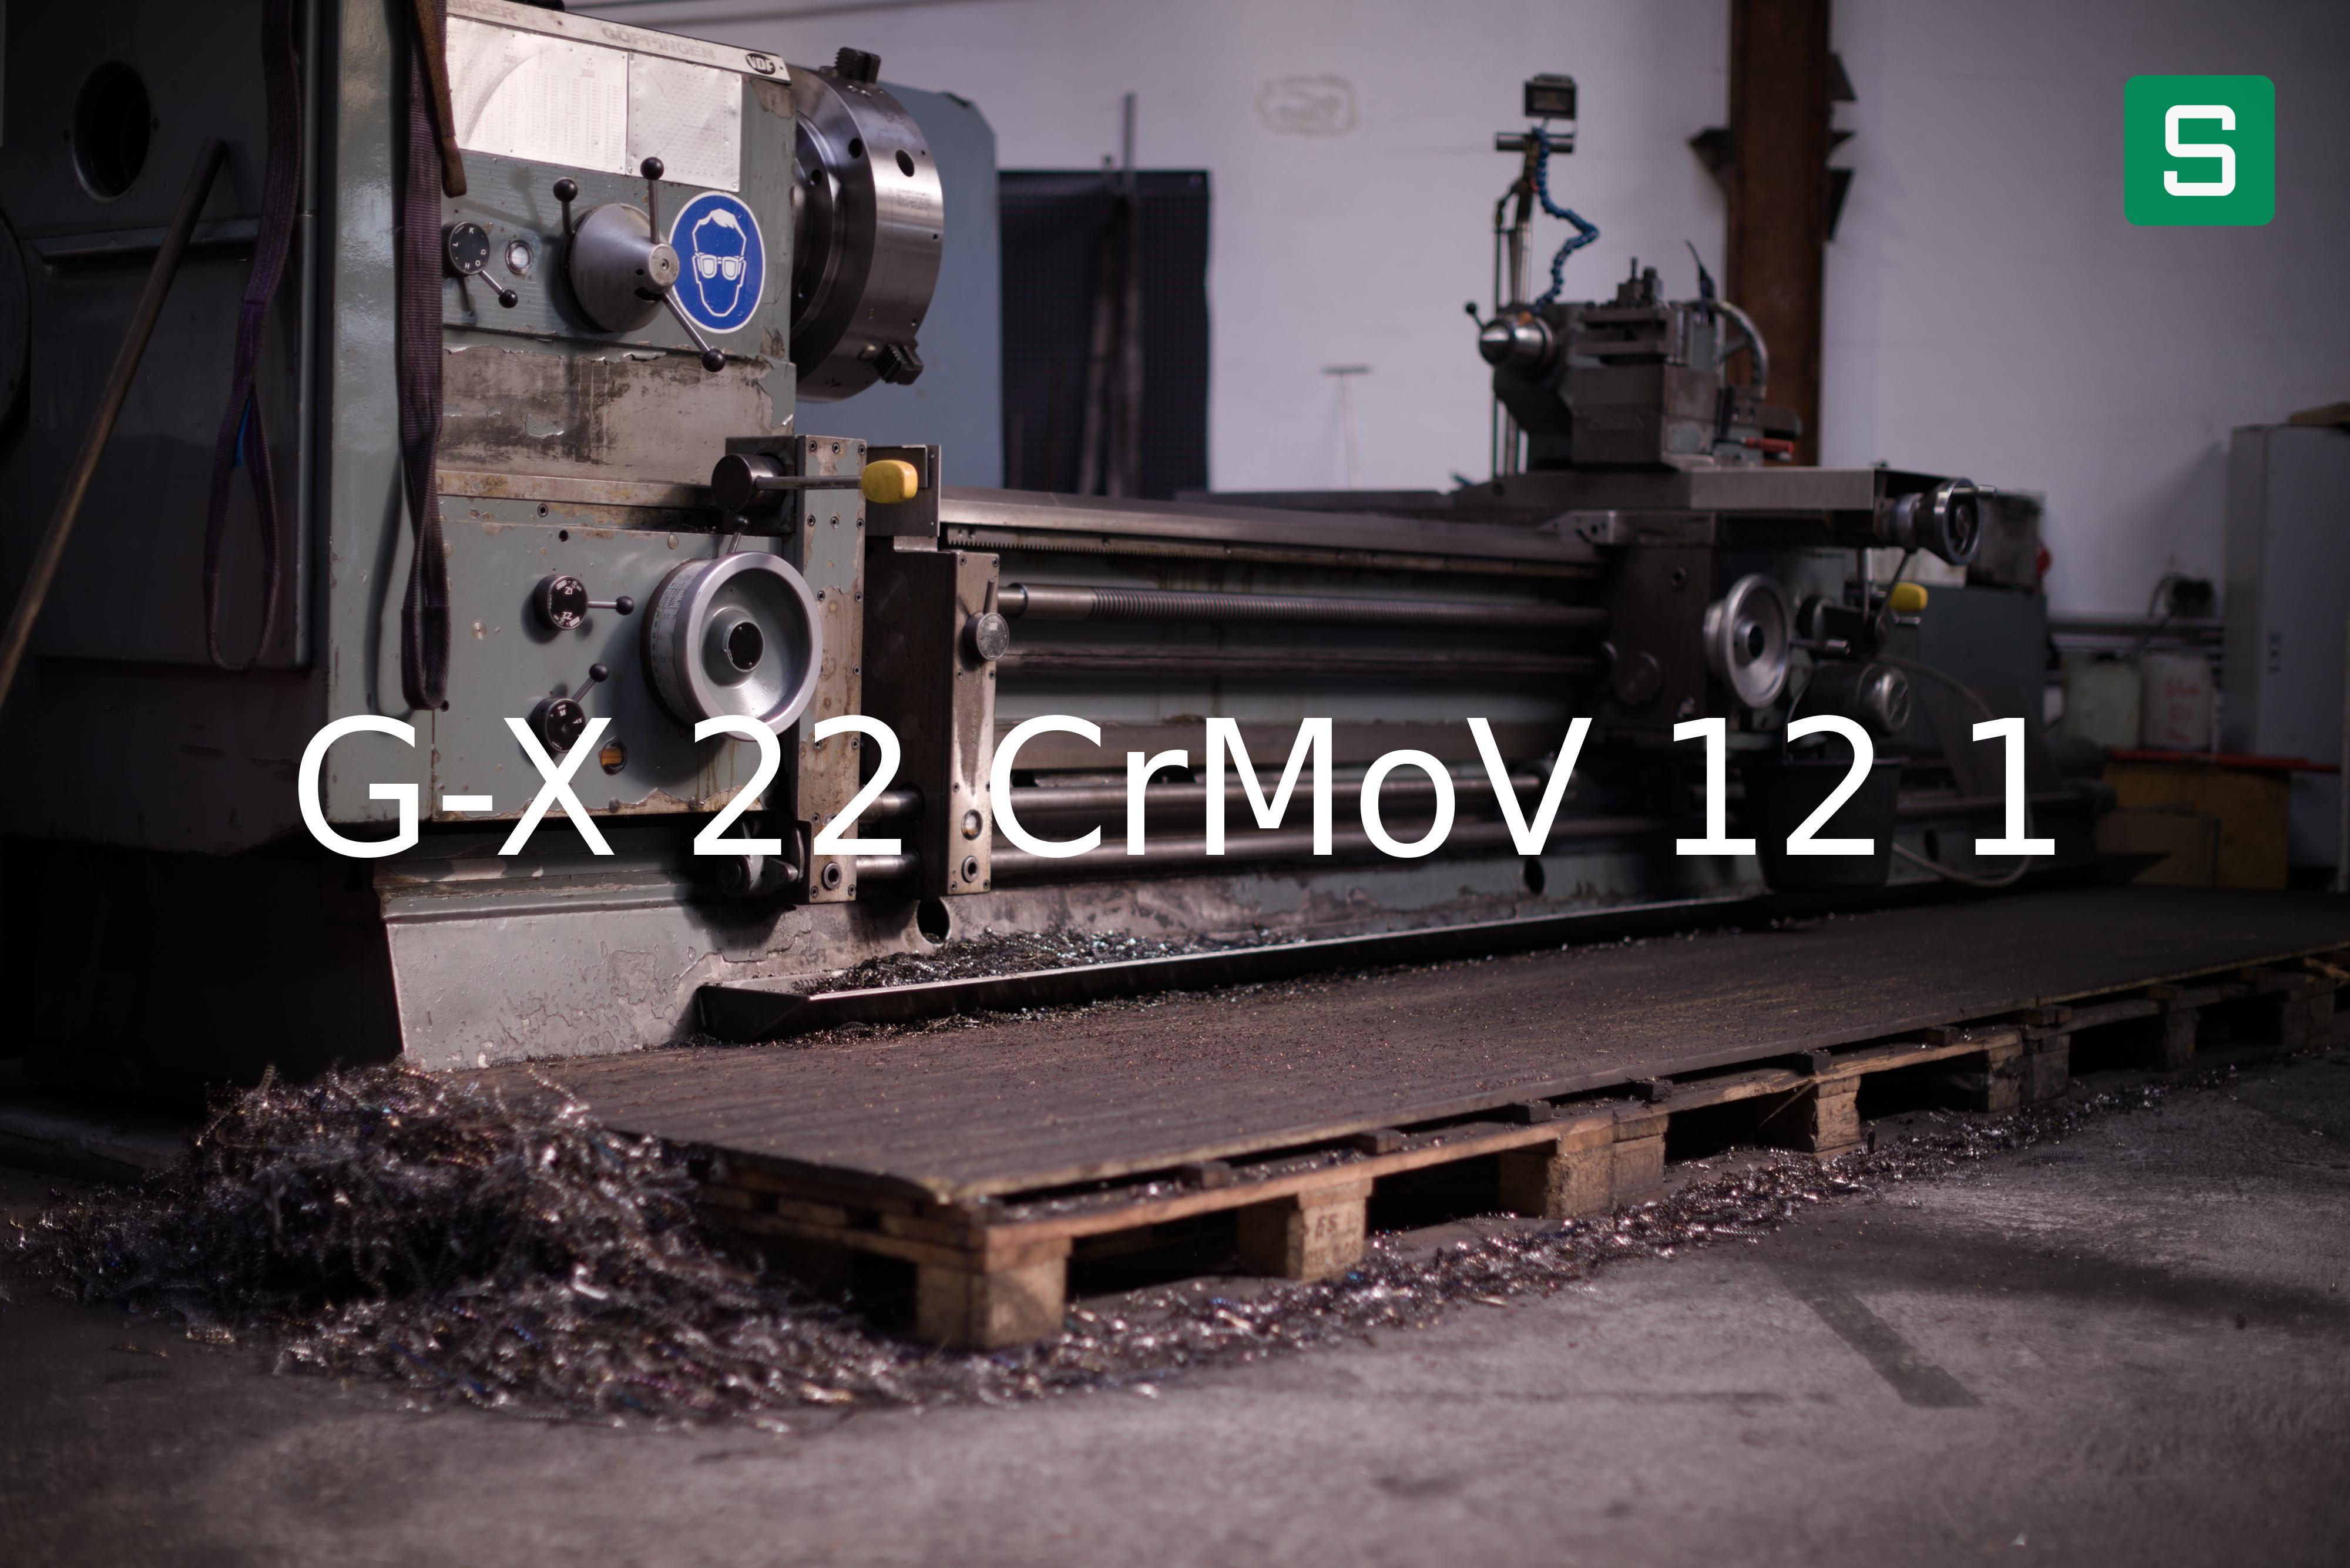 Steel Material: G-X 22 CrMoV 12 1